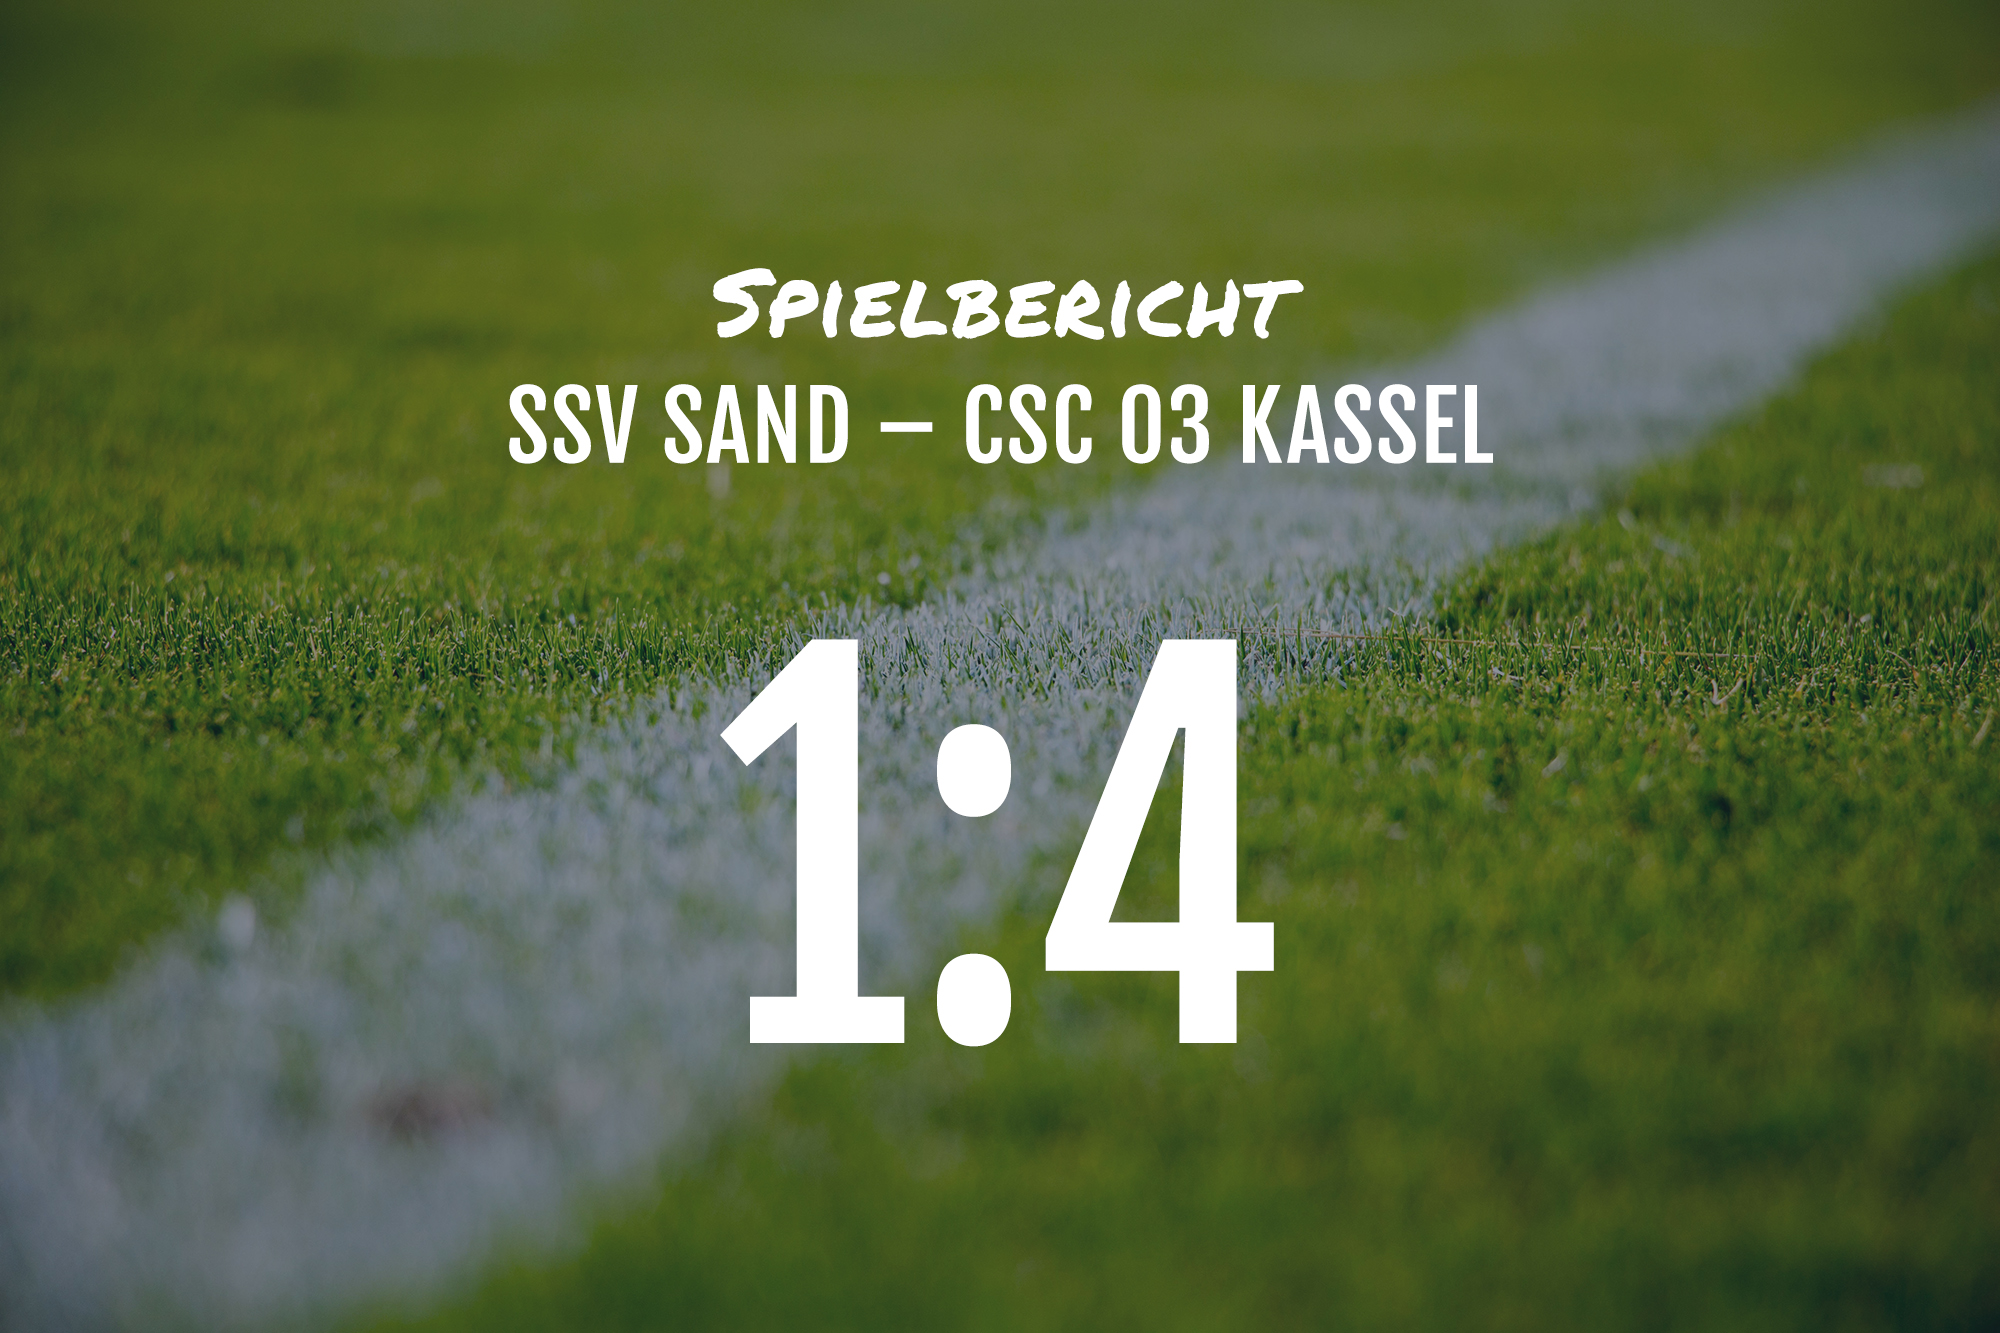 Spielbericht: SSV Sand – CSC 03 Kassel 1:4